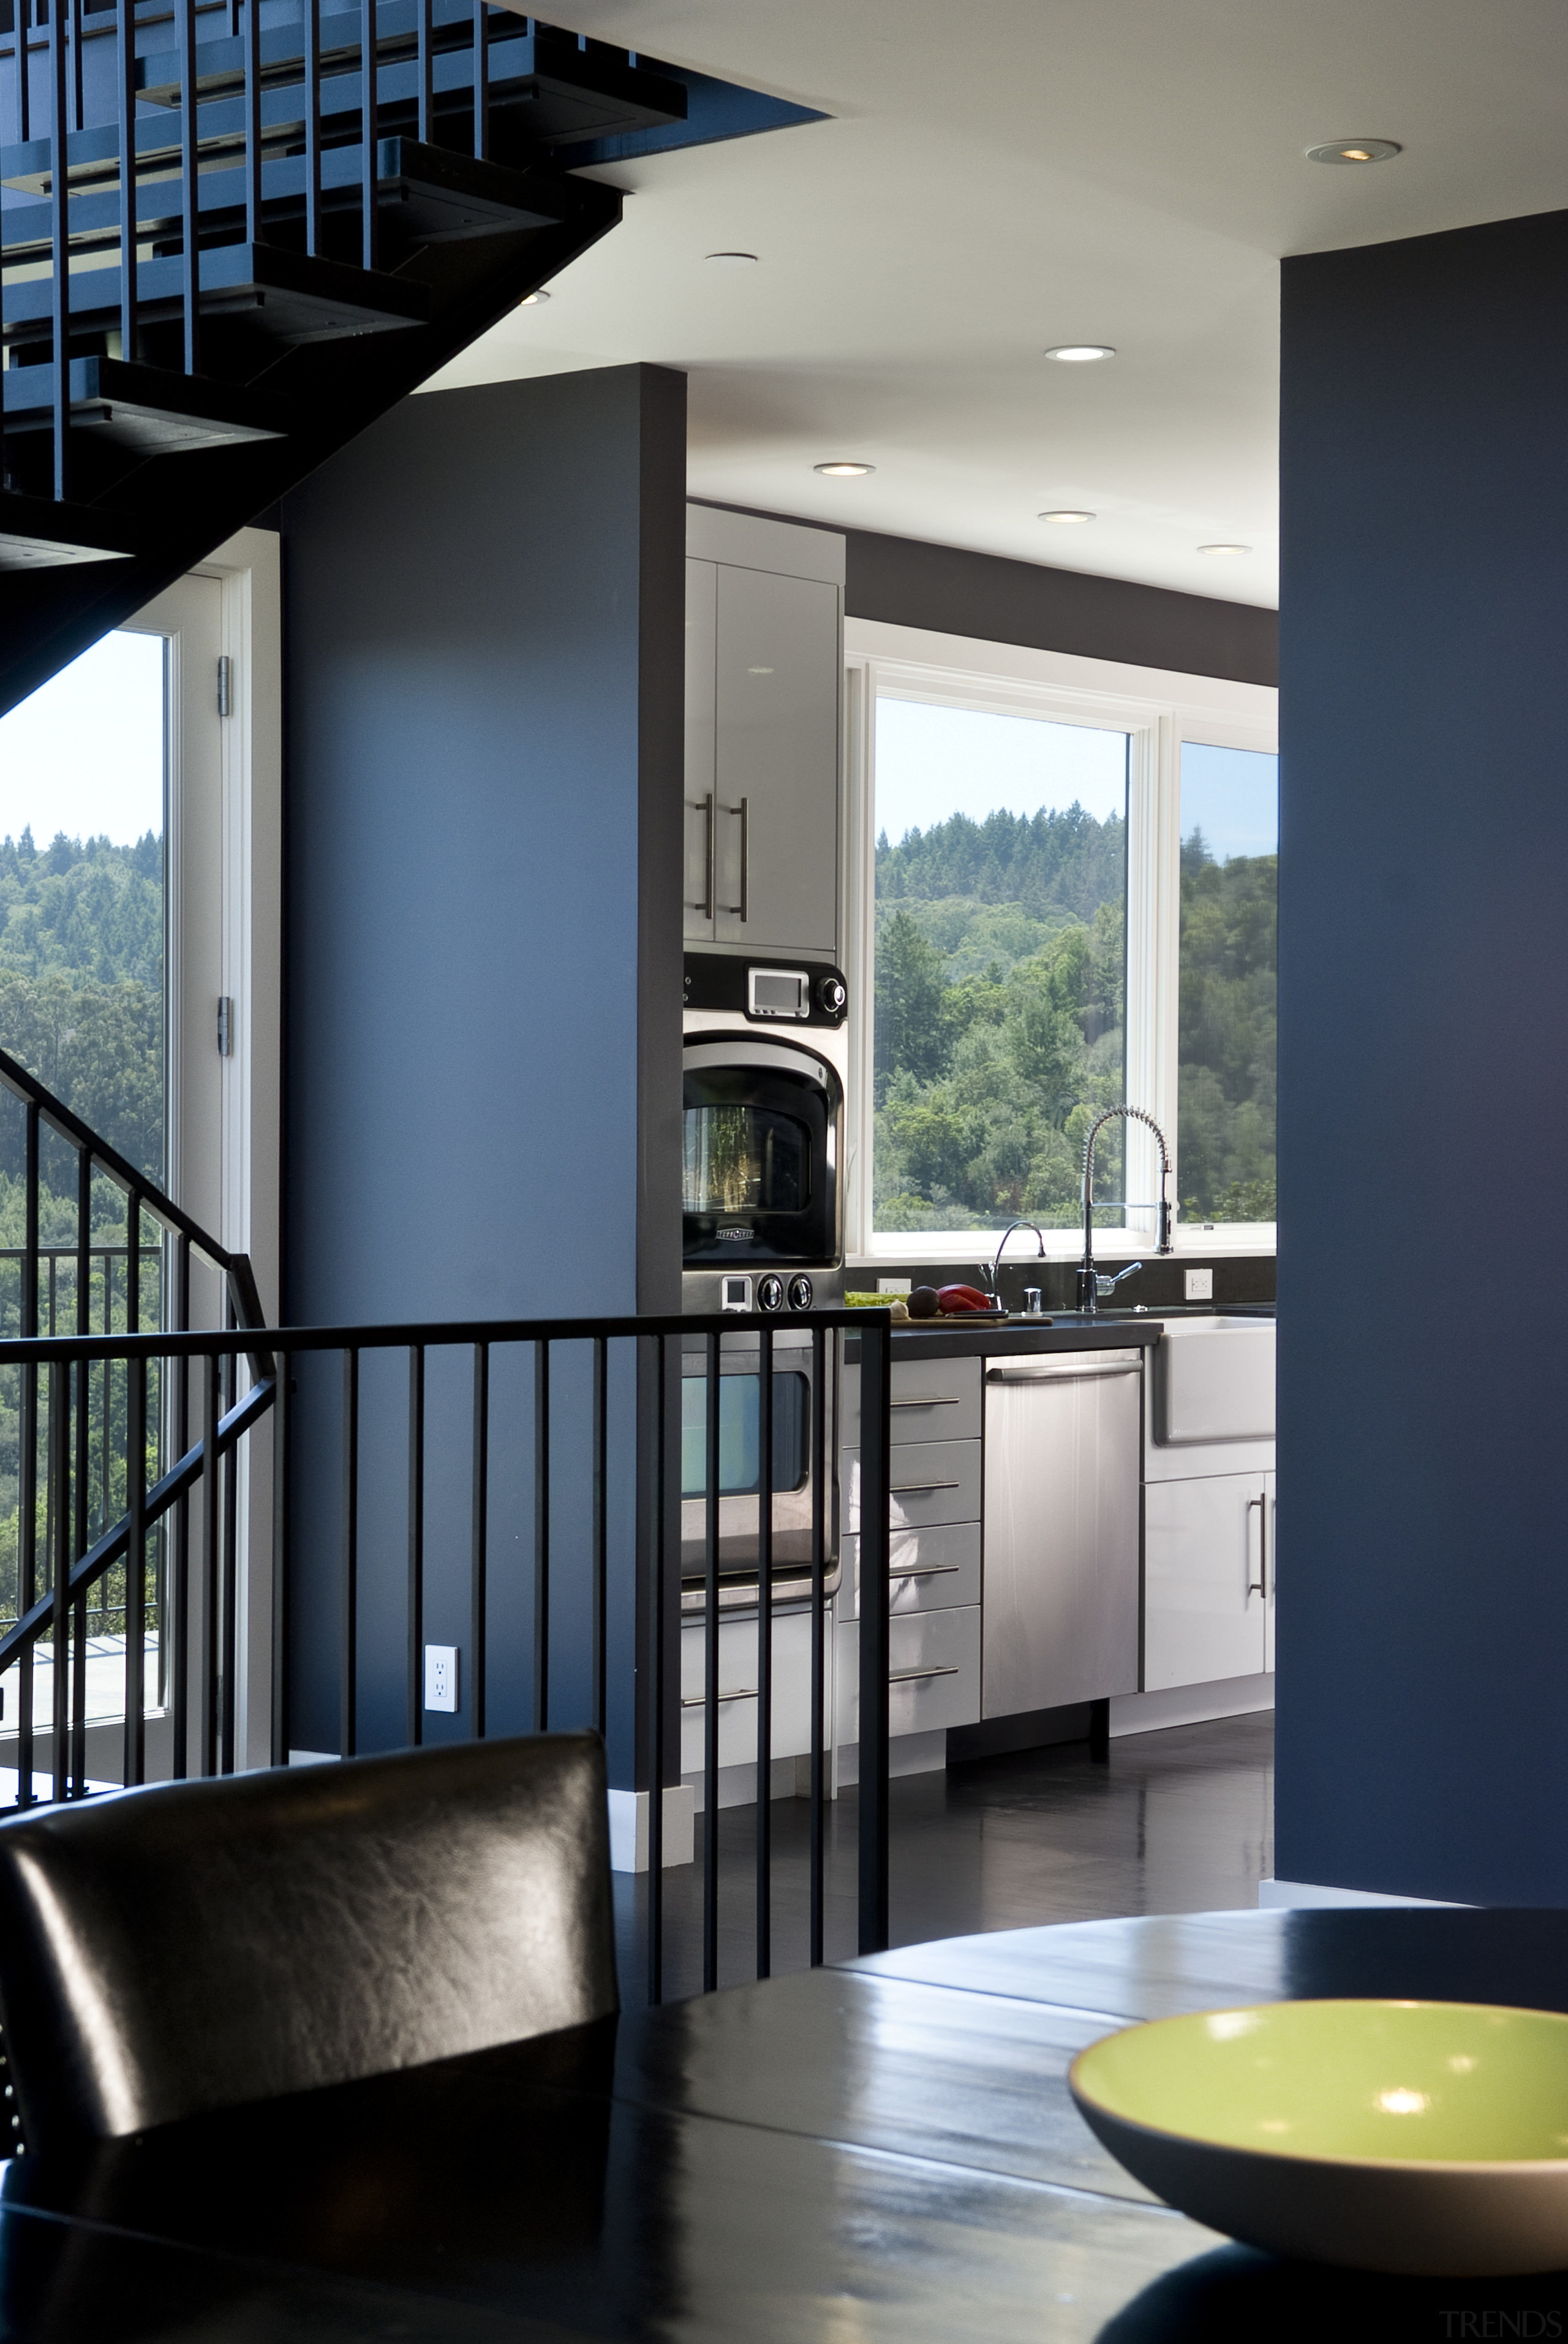 Euro style cabinetry doors. Dark quartzite counter tops. architecture, home, house, interior design, window, black, gray